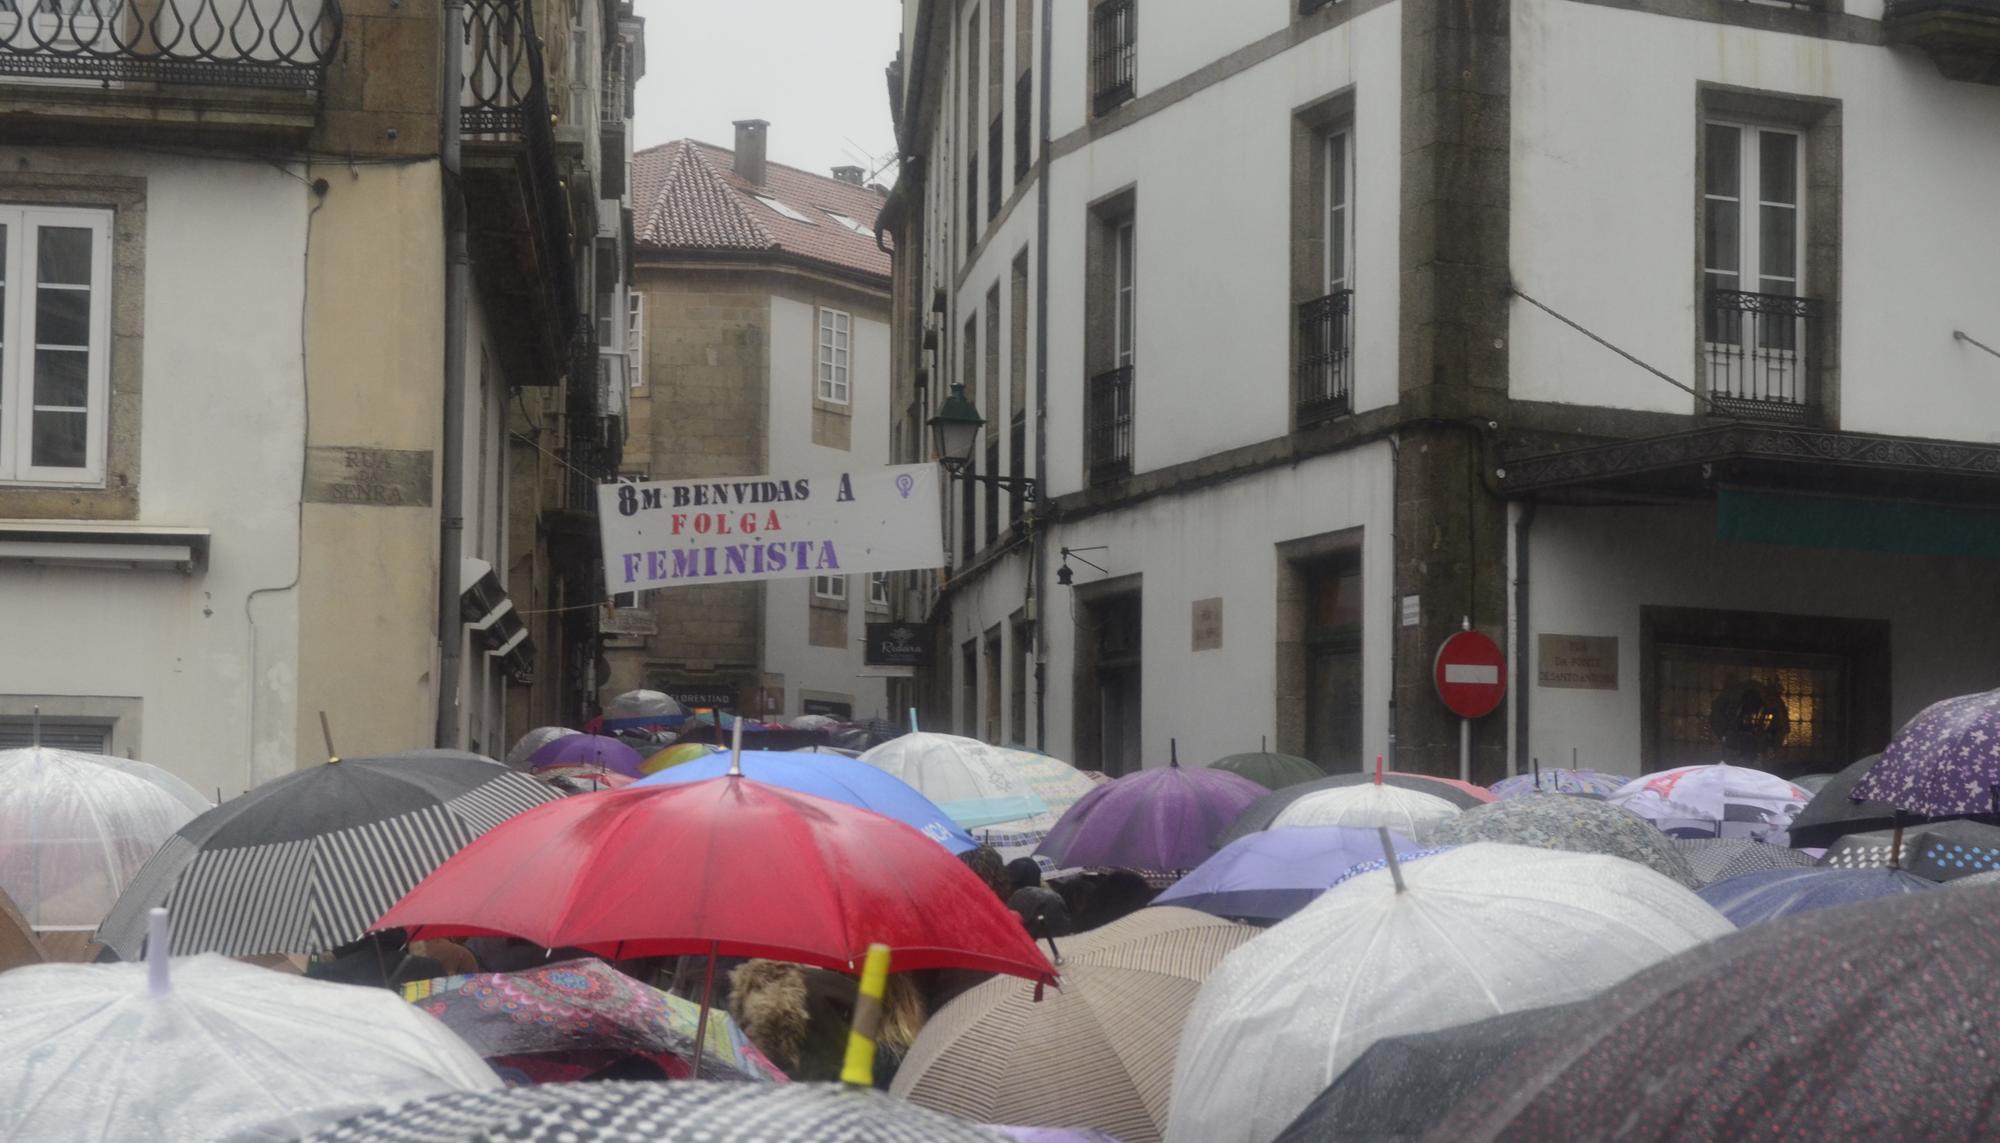 Manifestación feminista 8M Compostela